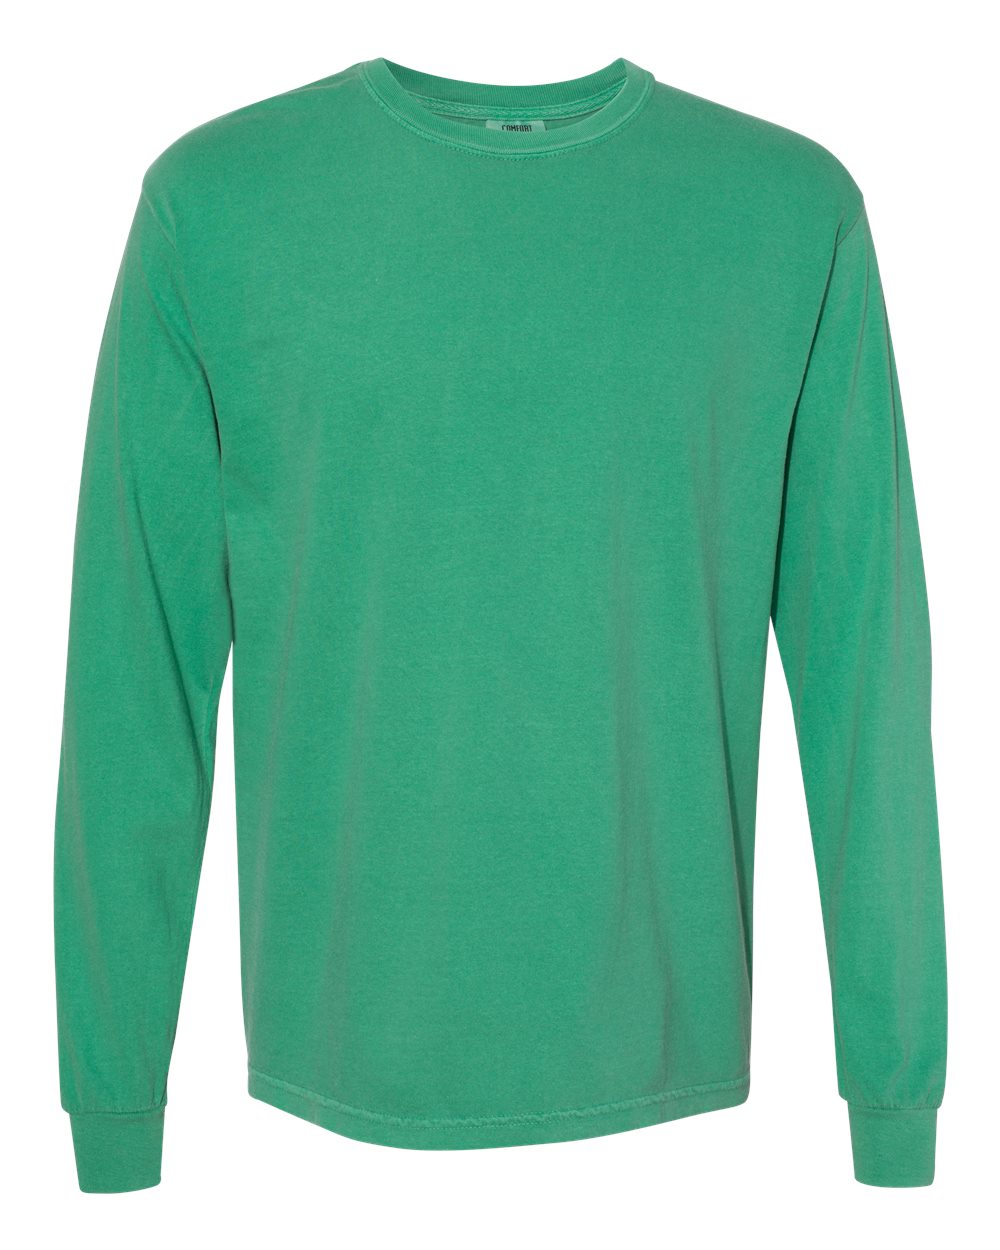 Comfort Colors Heavyweight Long Sleeve T-Shirt Size 2XLarge